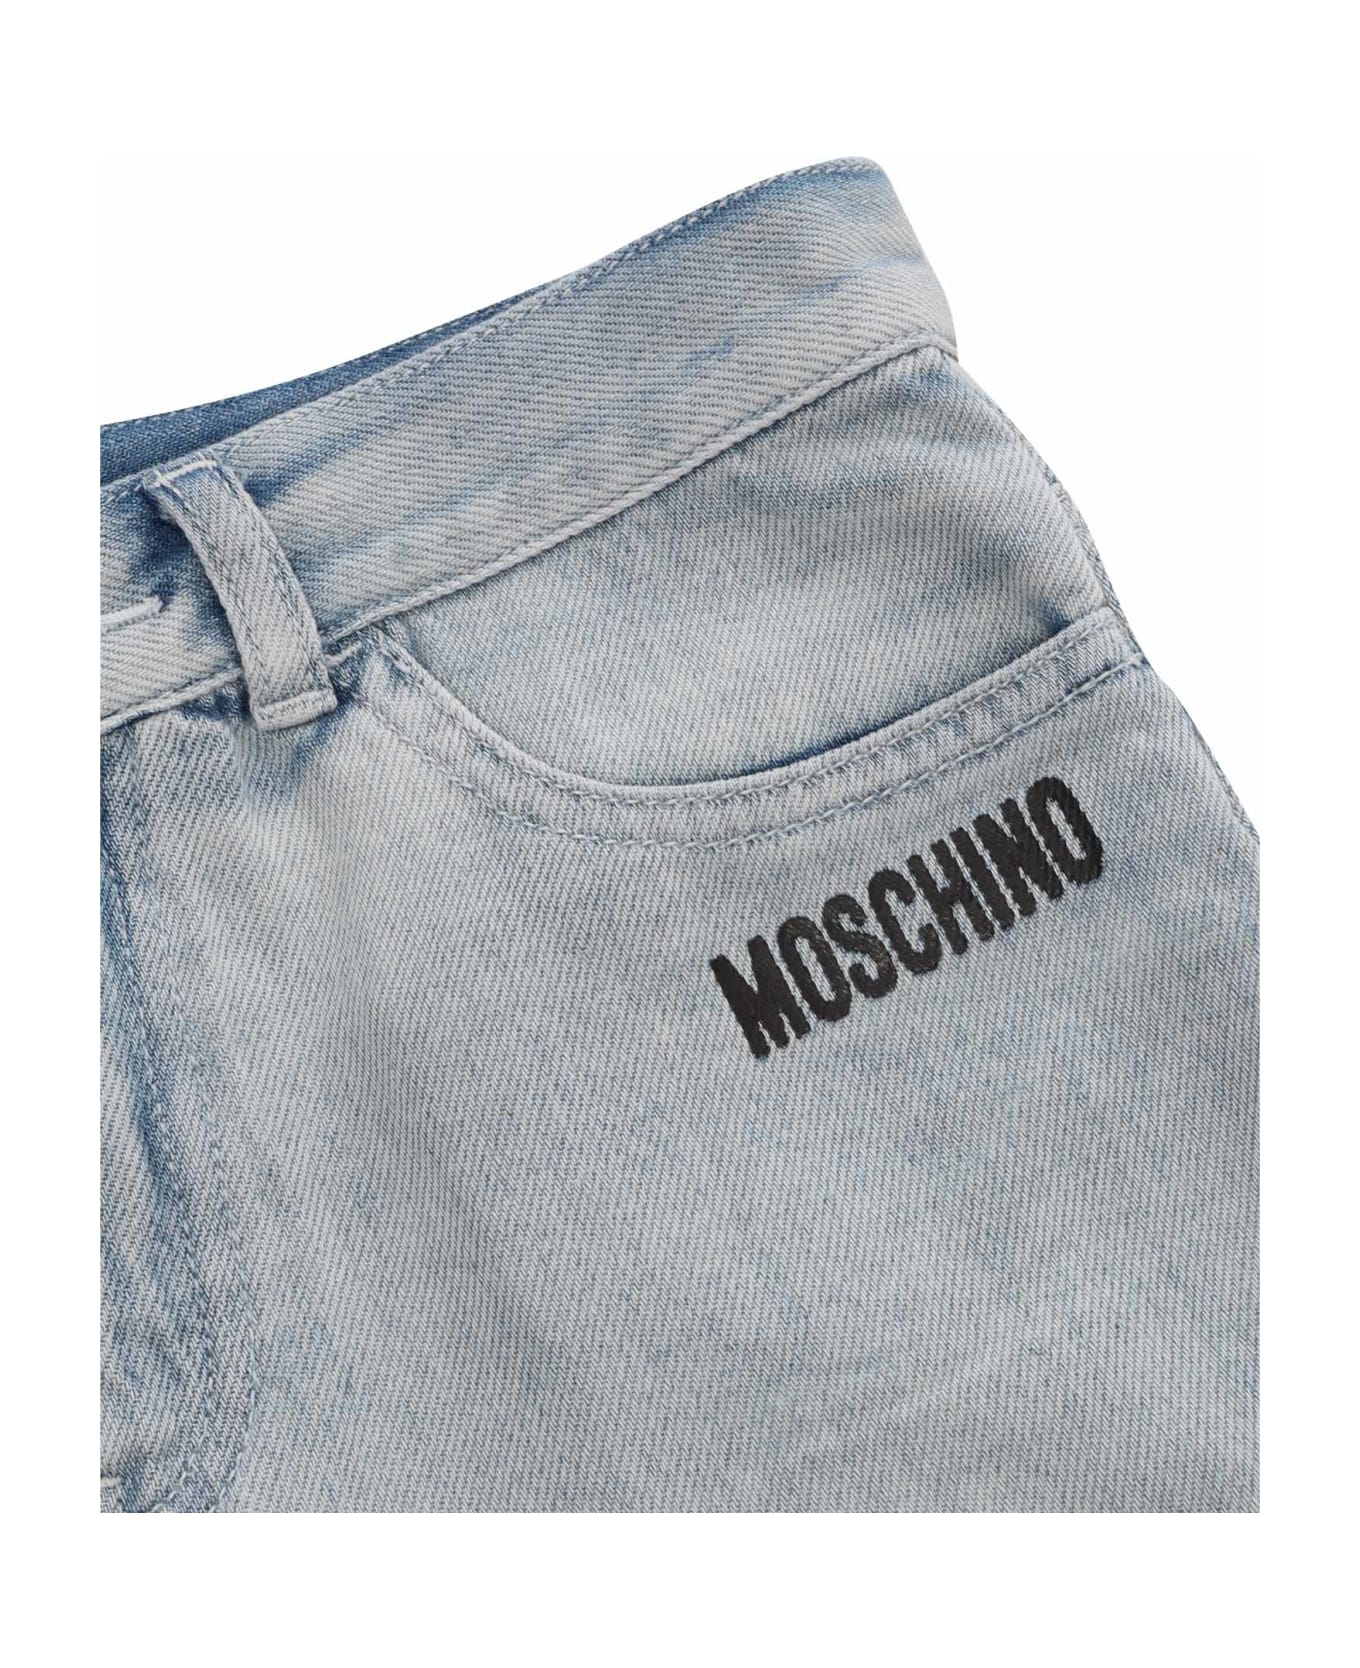 Moschino Denim Bermuda Shorts - BLUE